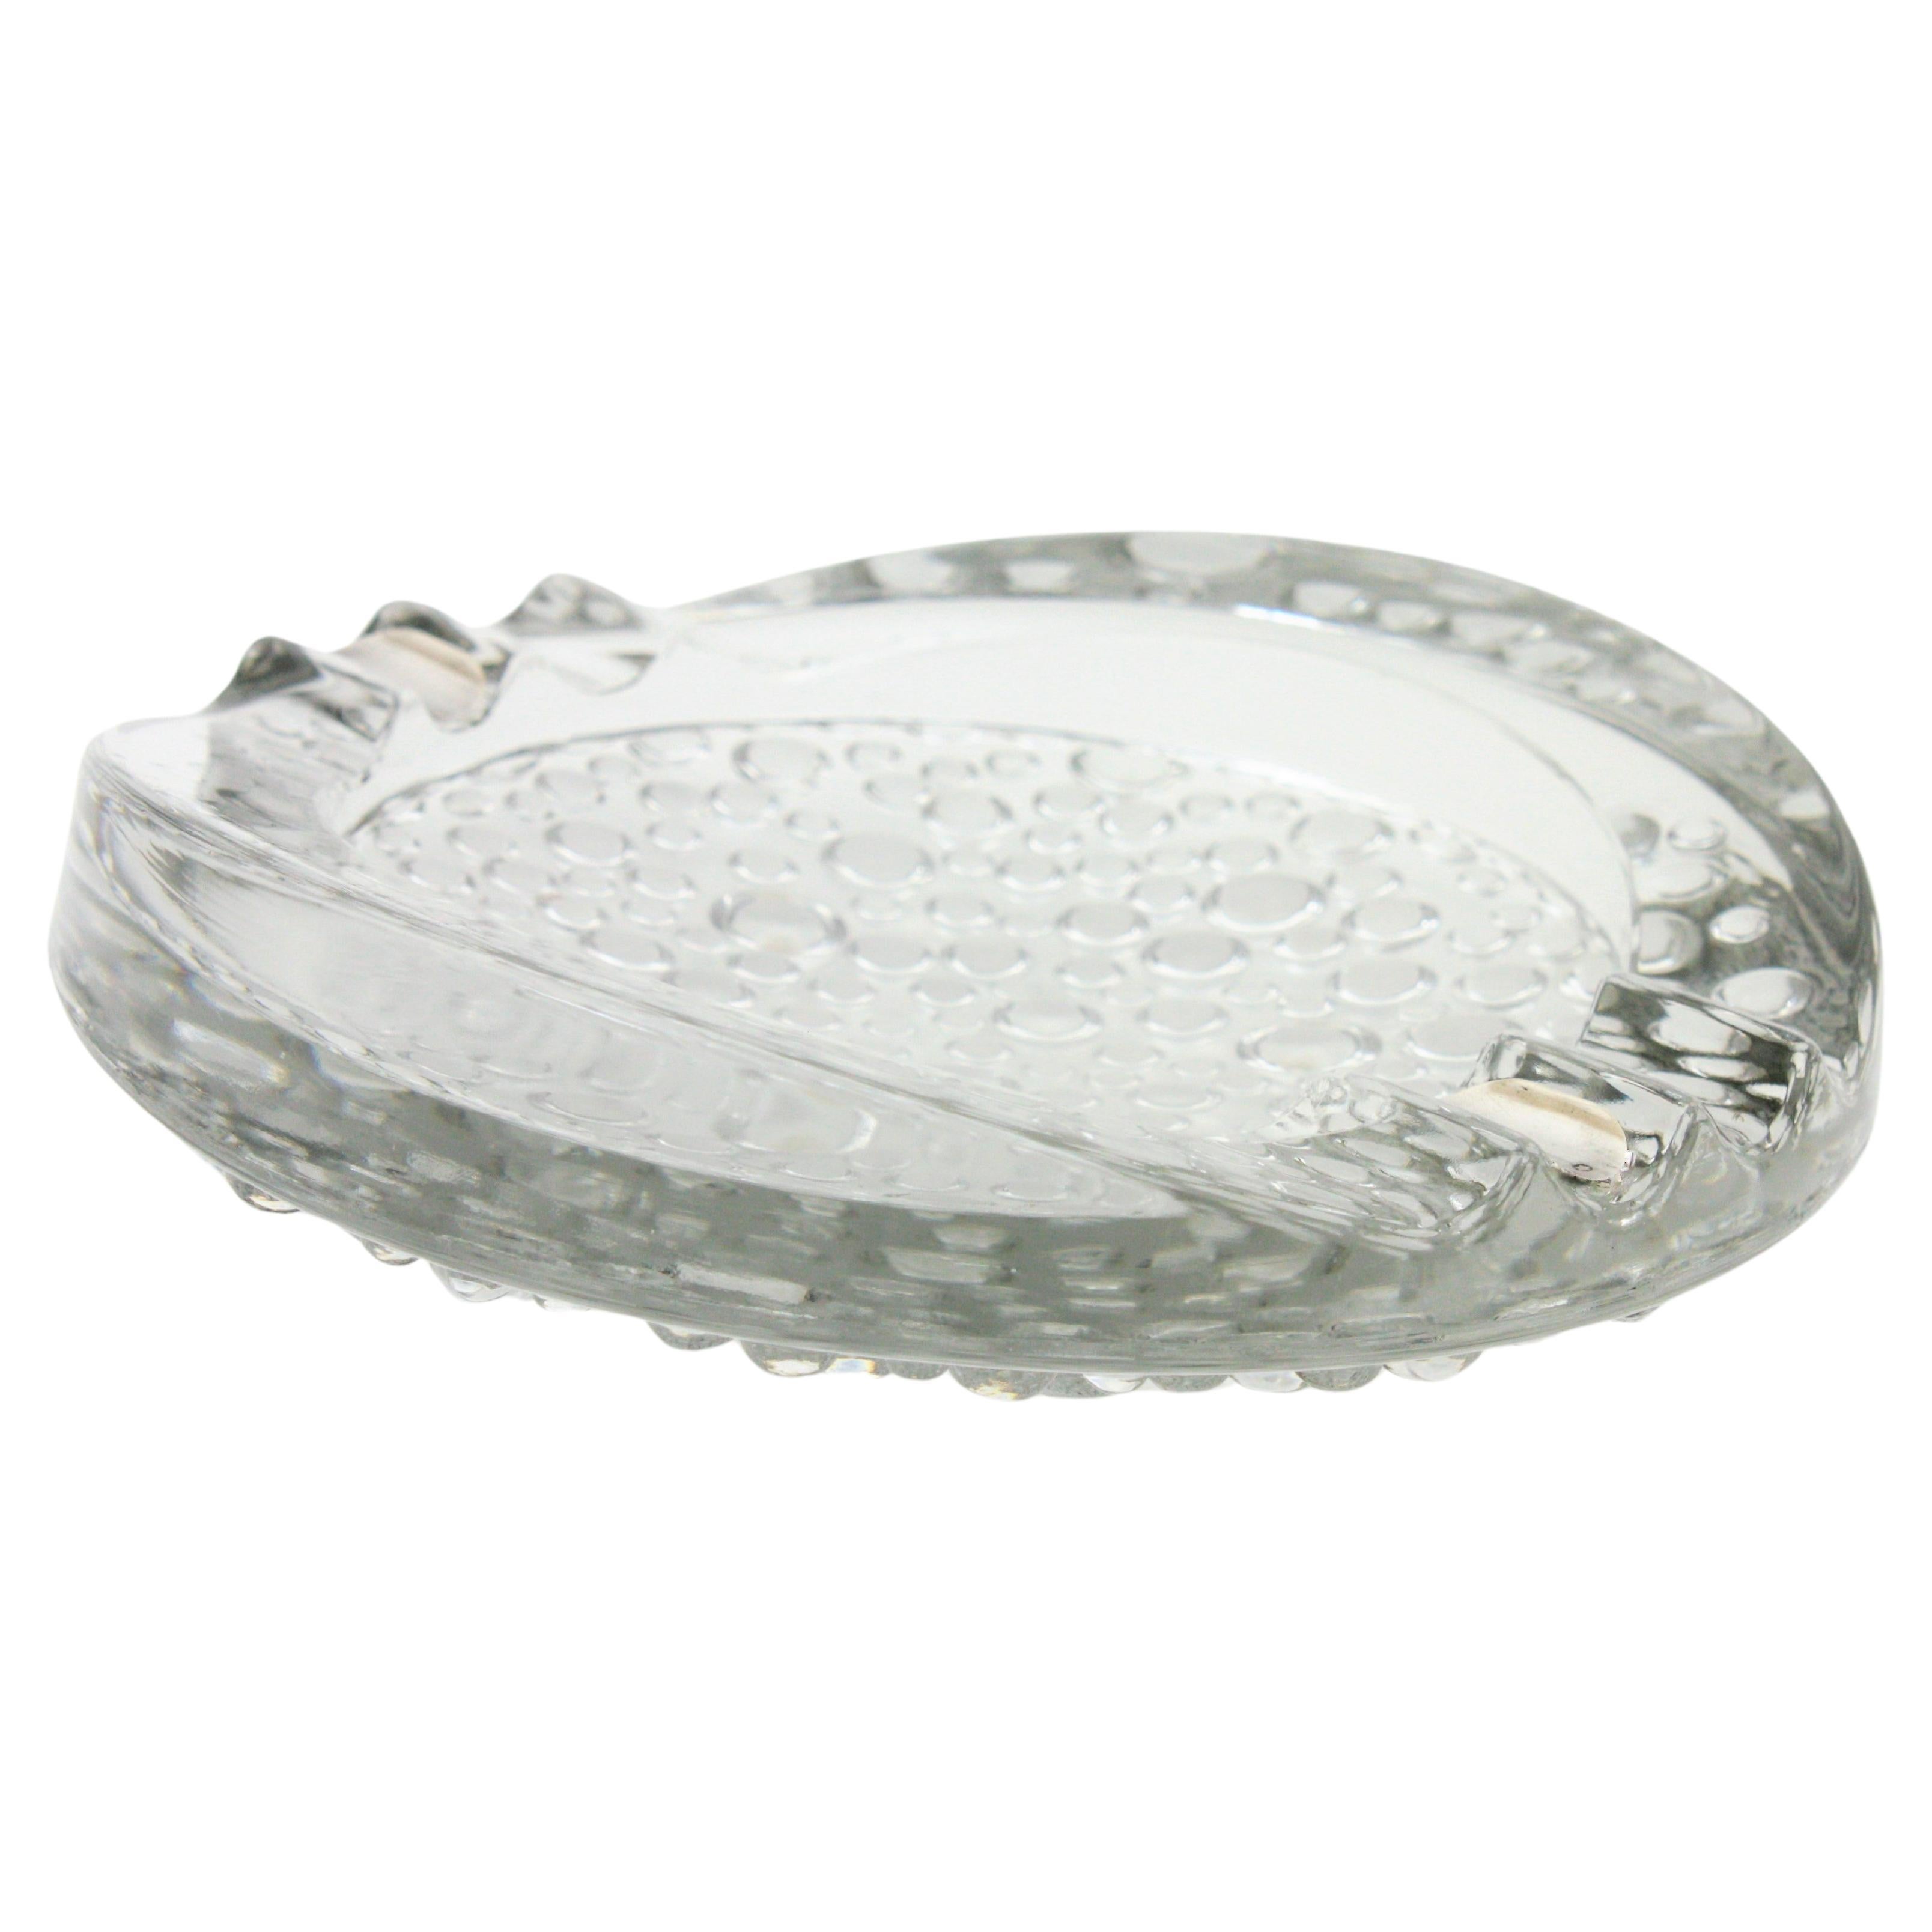 Murano Italian Art Glass Ashtray, Bubbles Design and Sterling Silver Details For Sale